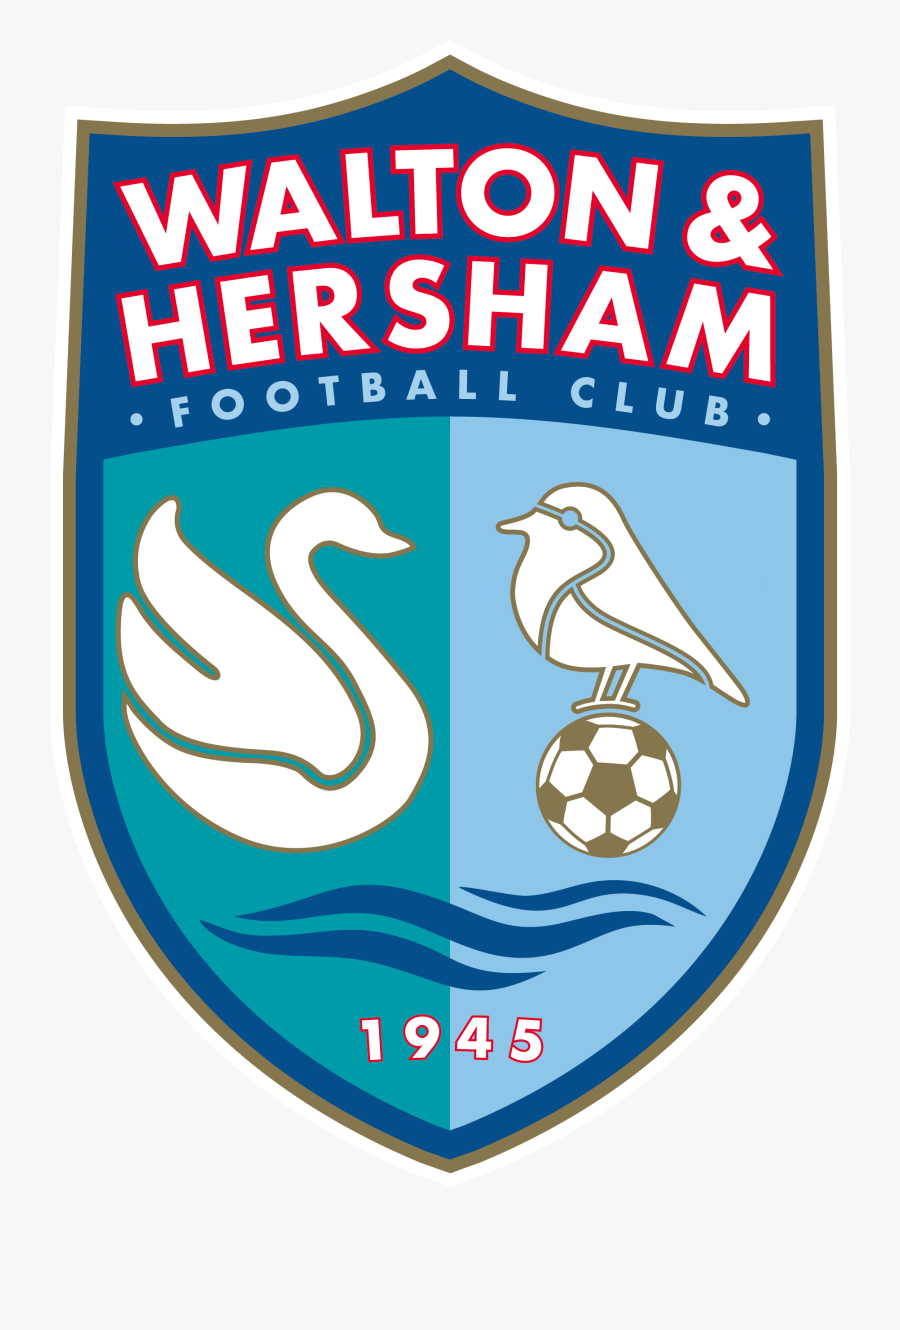 Walton & Hersham Football Club - Walton And Hersham Fc, Transparent Clipart